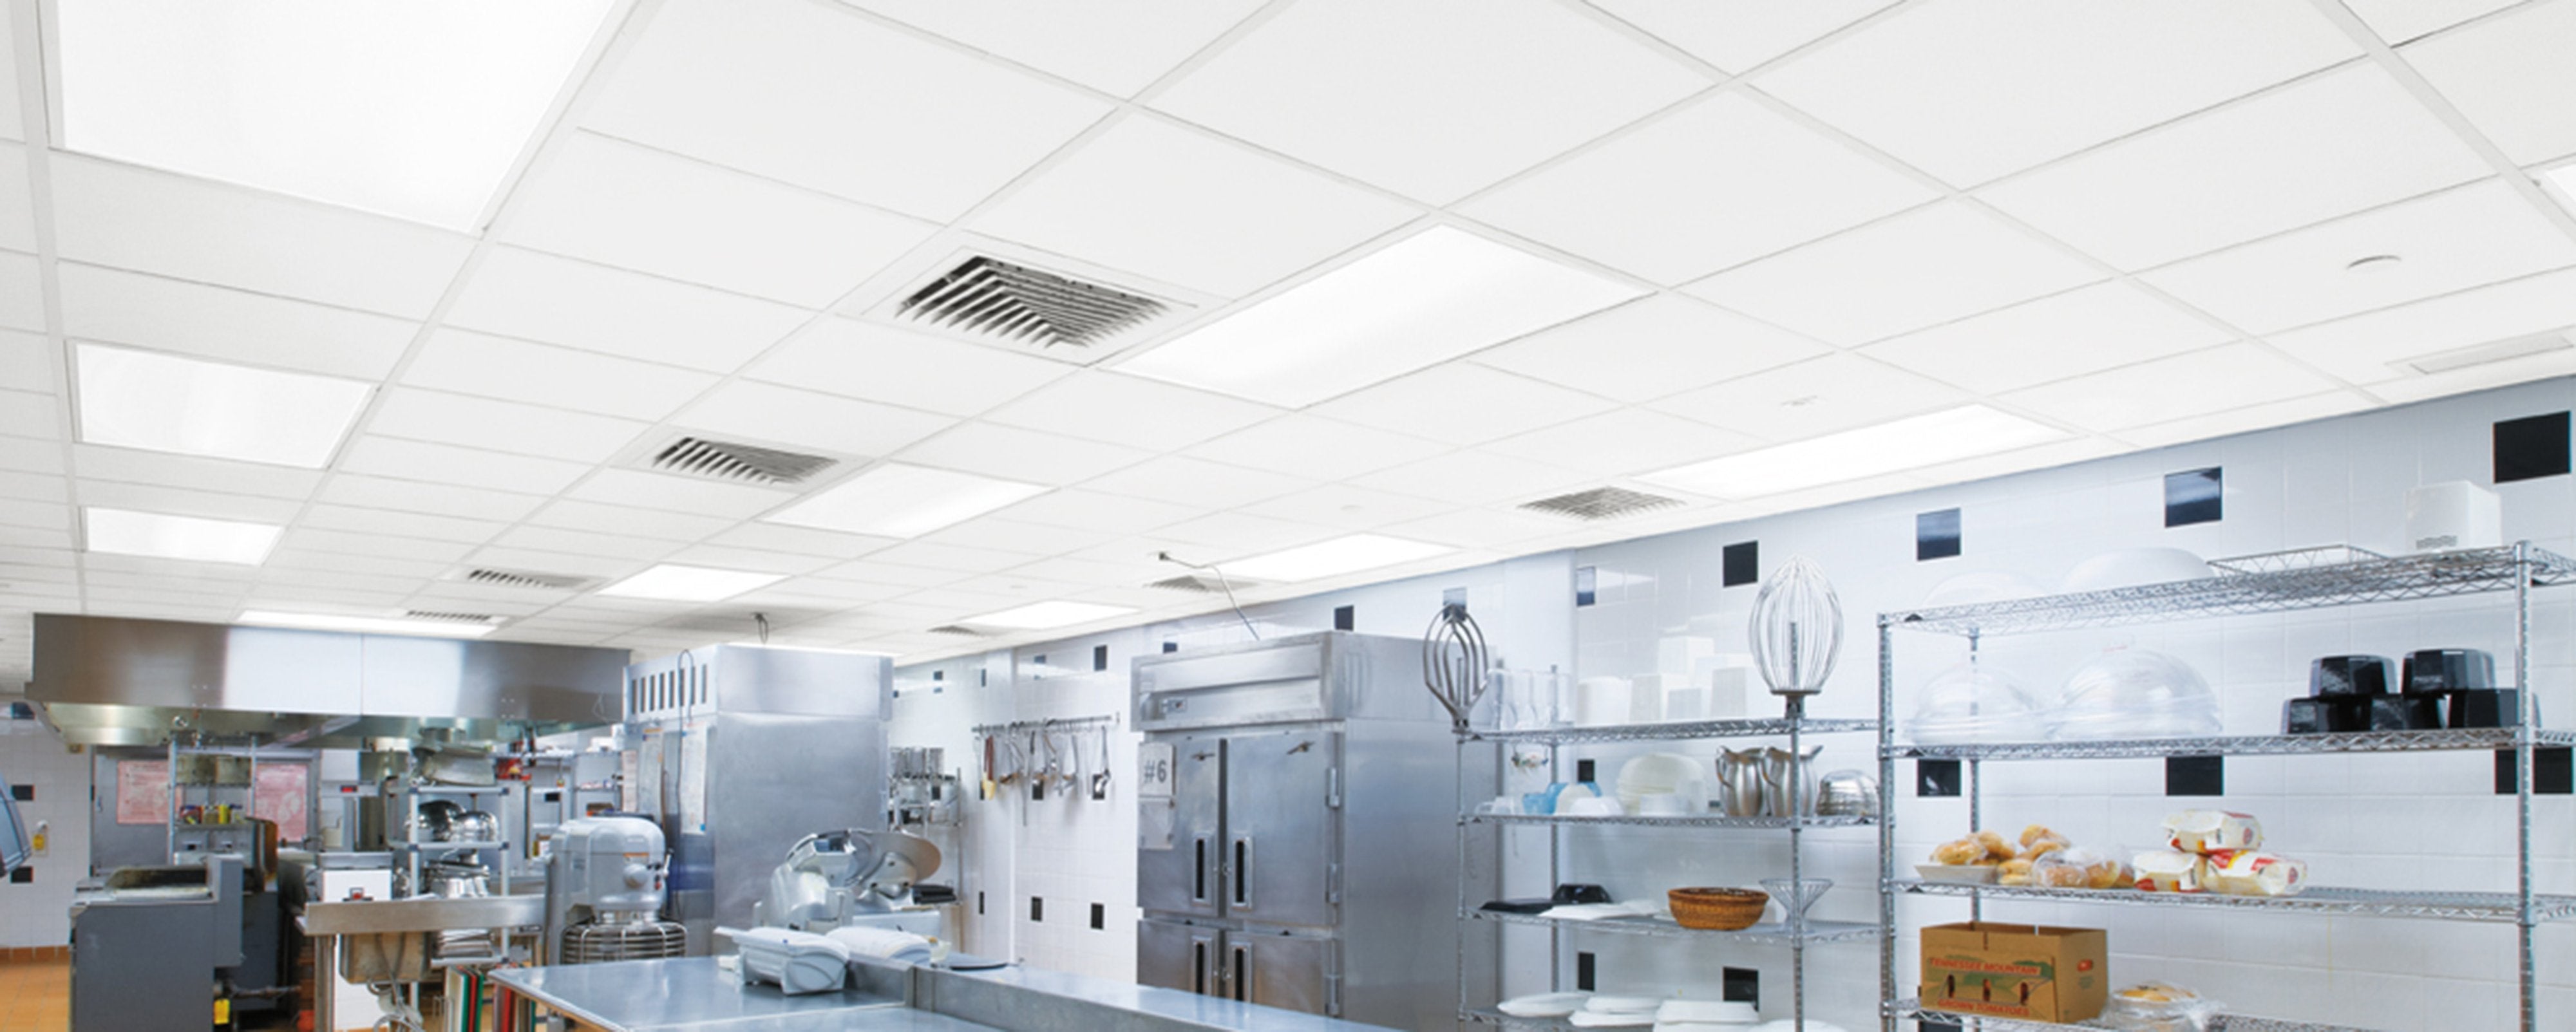 commercial kitchen ceiling design